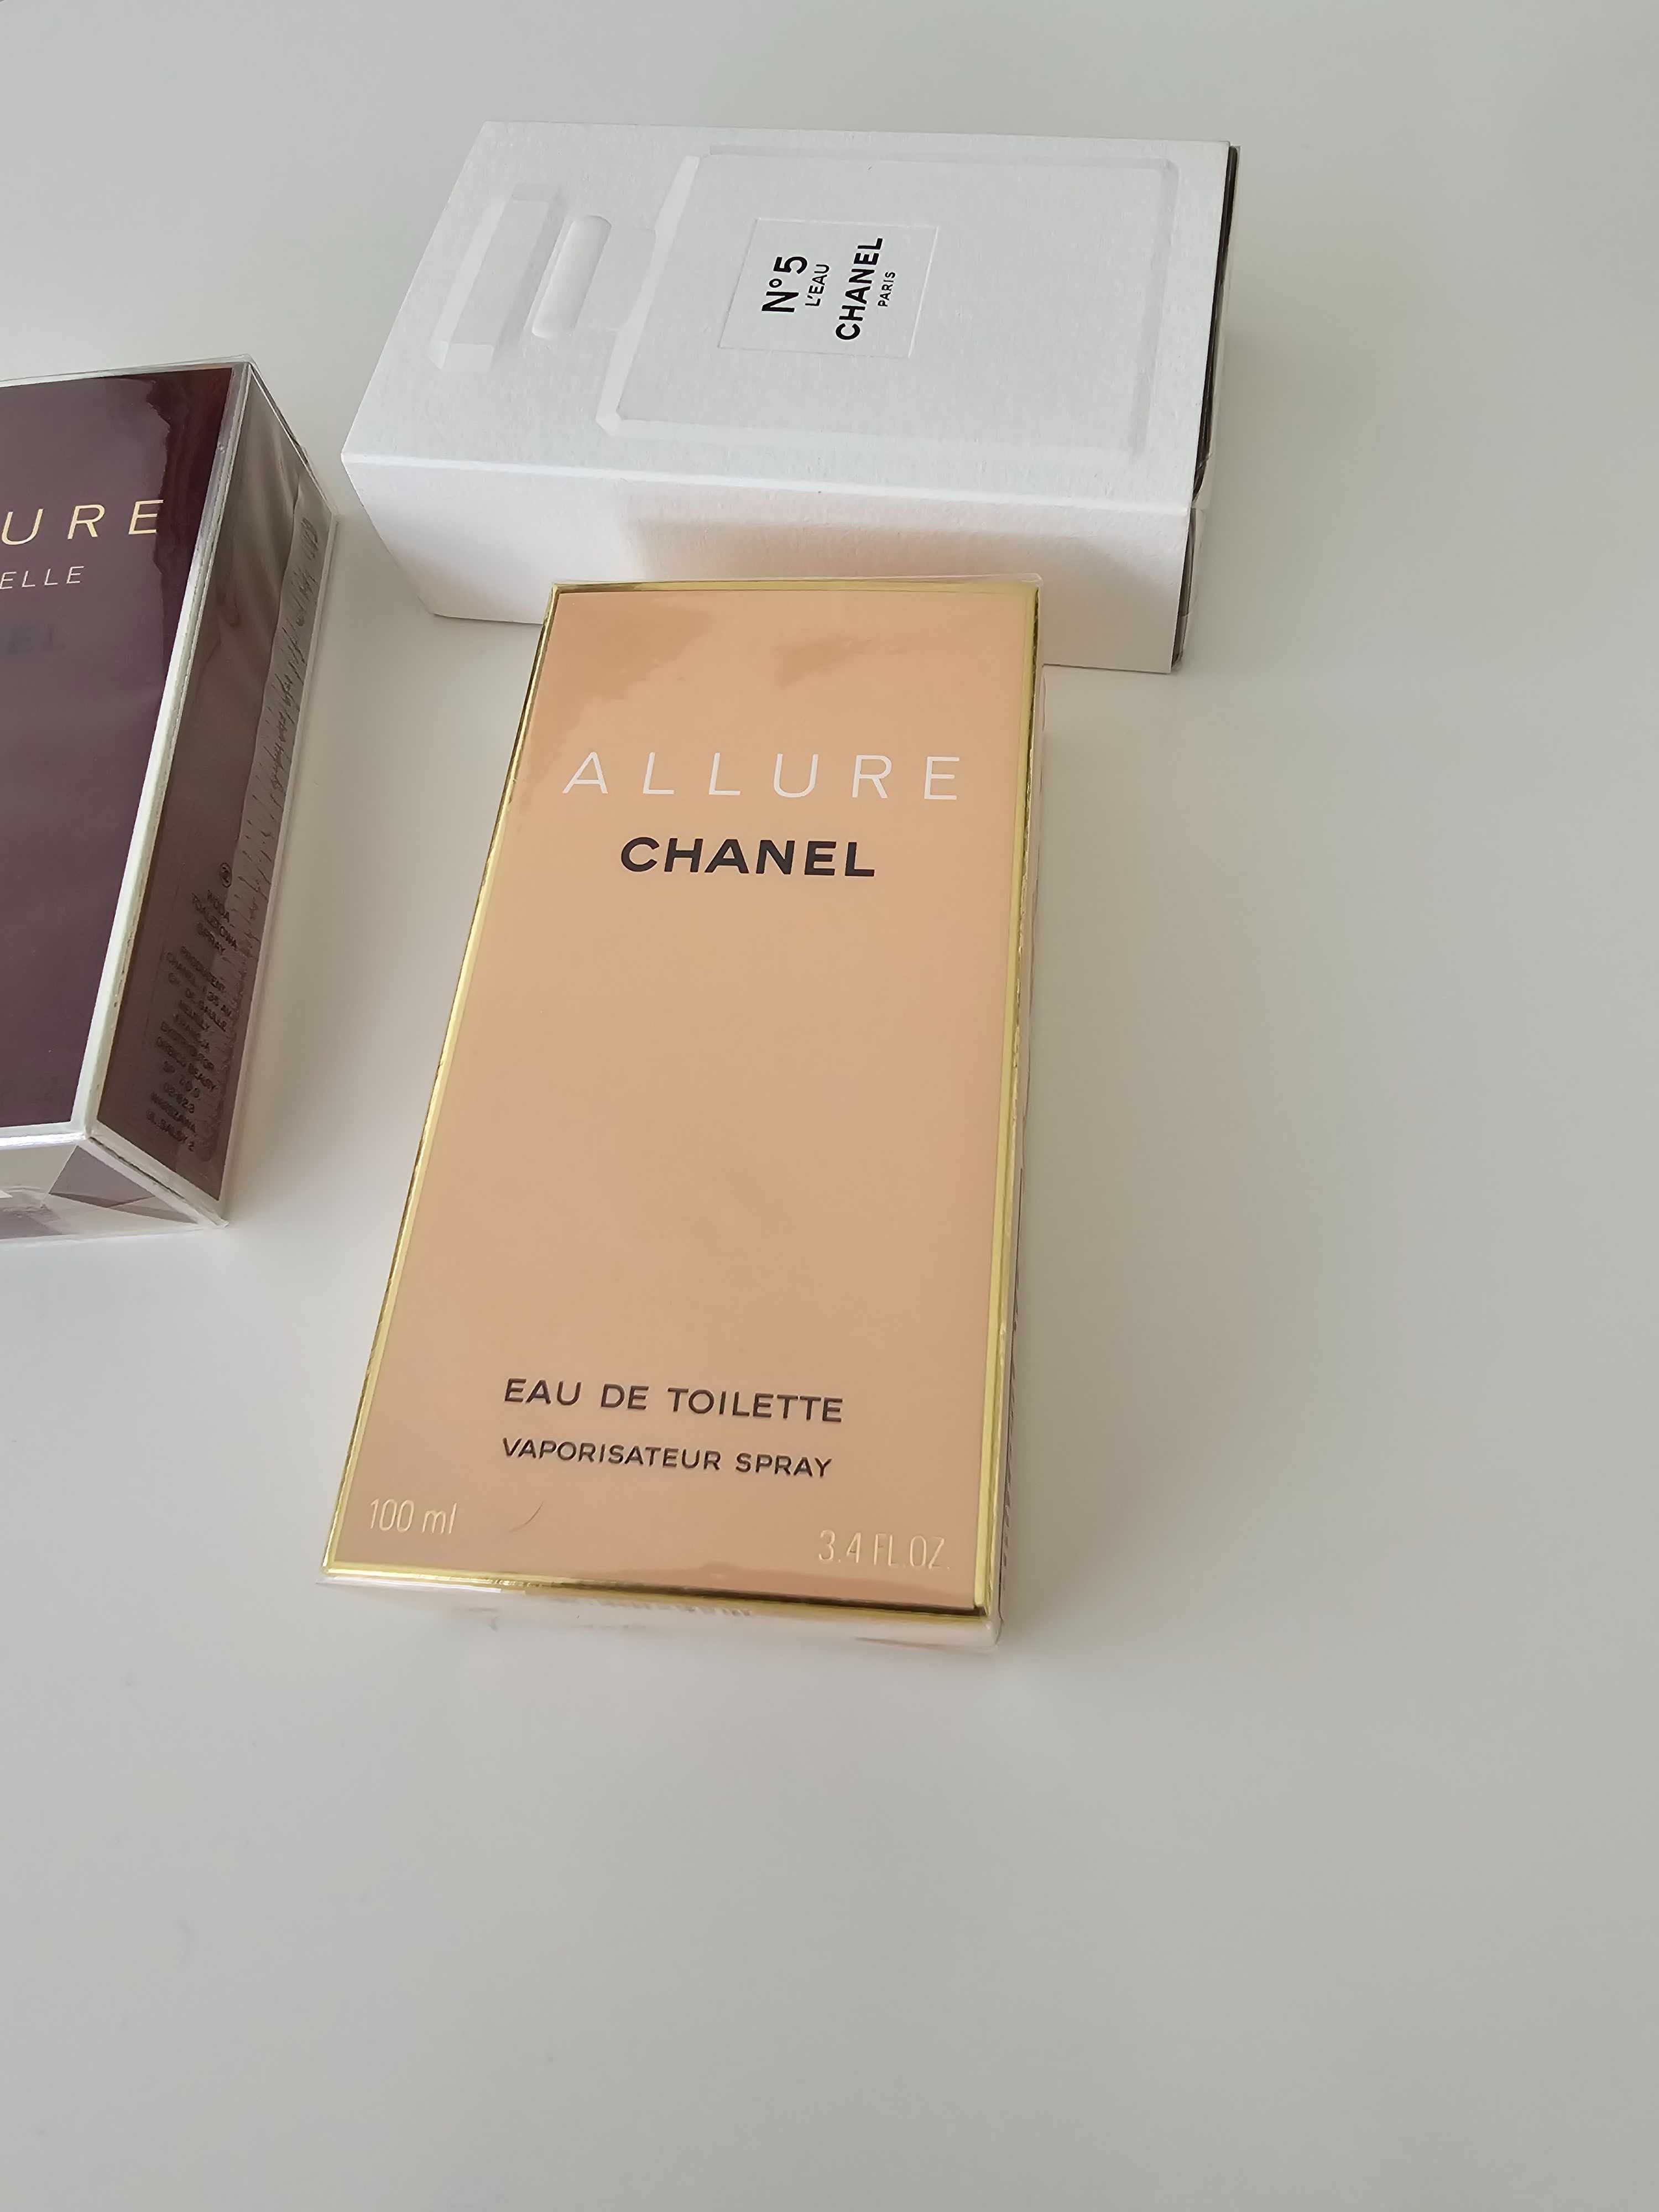 Chanel ALLURE eau de toilette 100ml oryginalne kupione  w duglasie